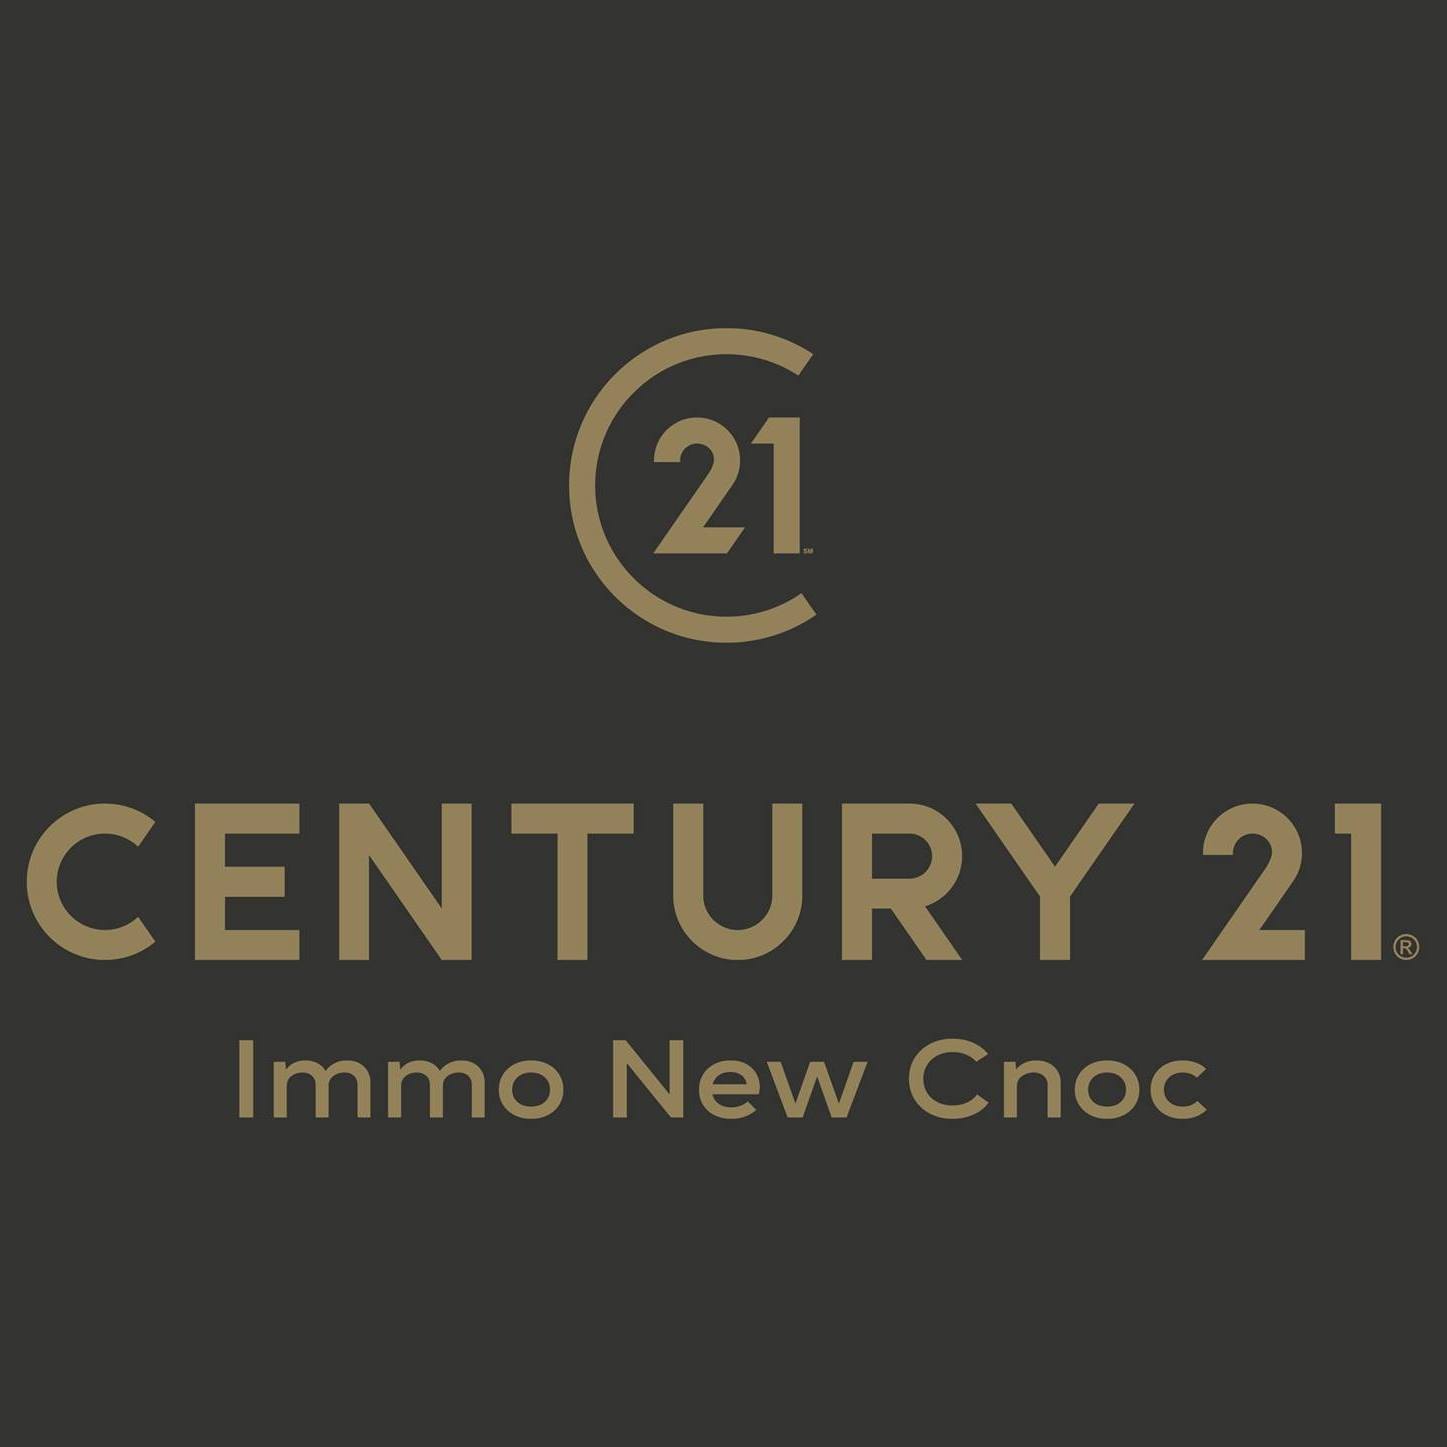 C21 Immo New Cnoc